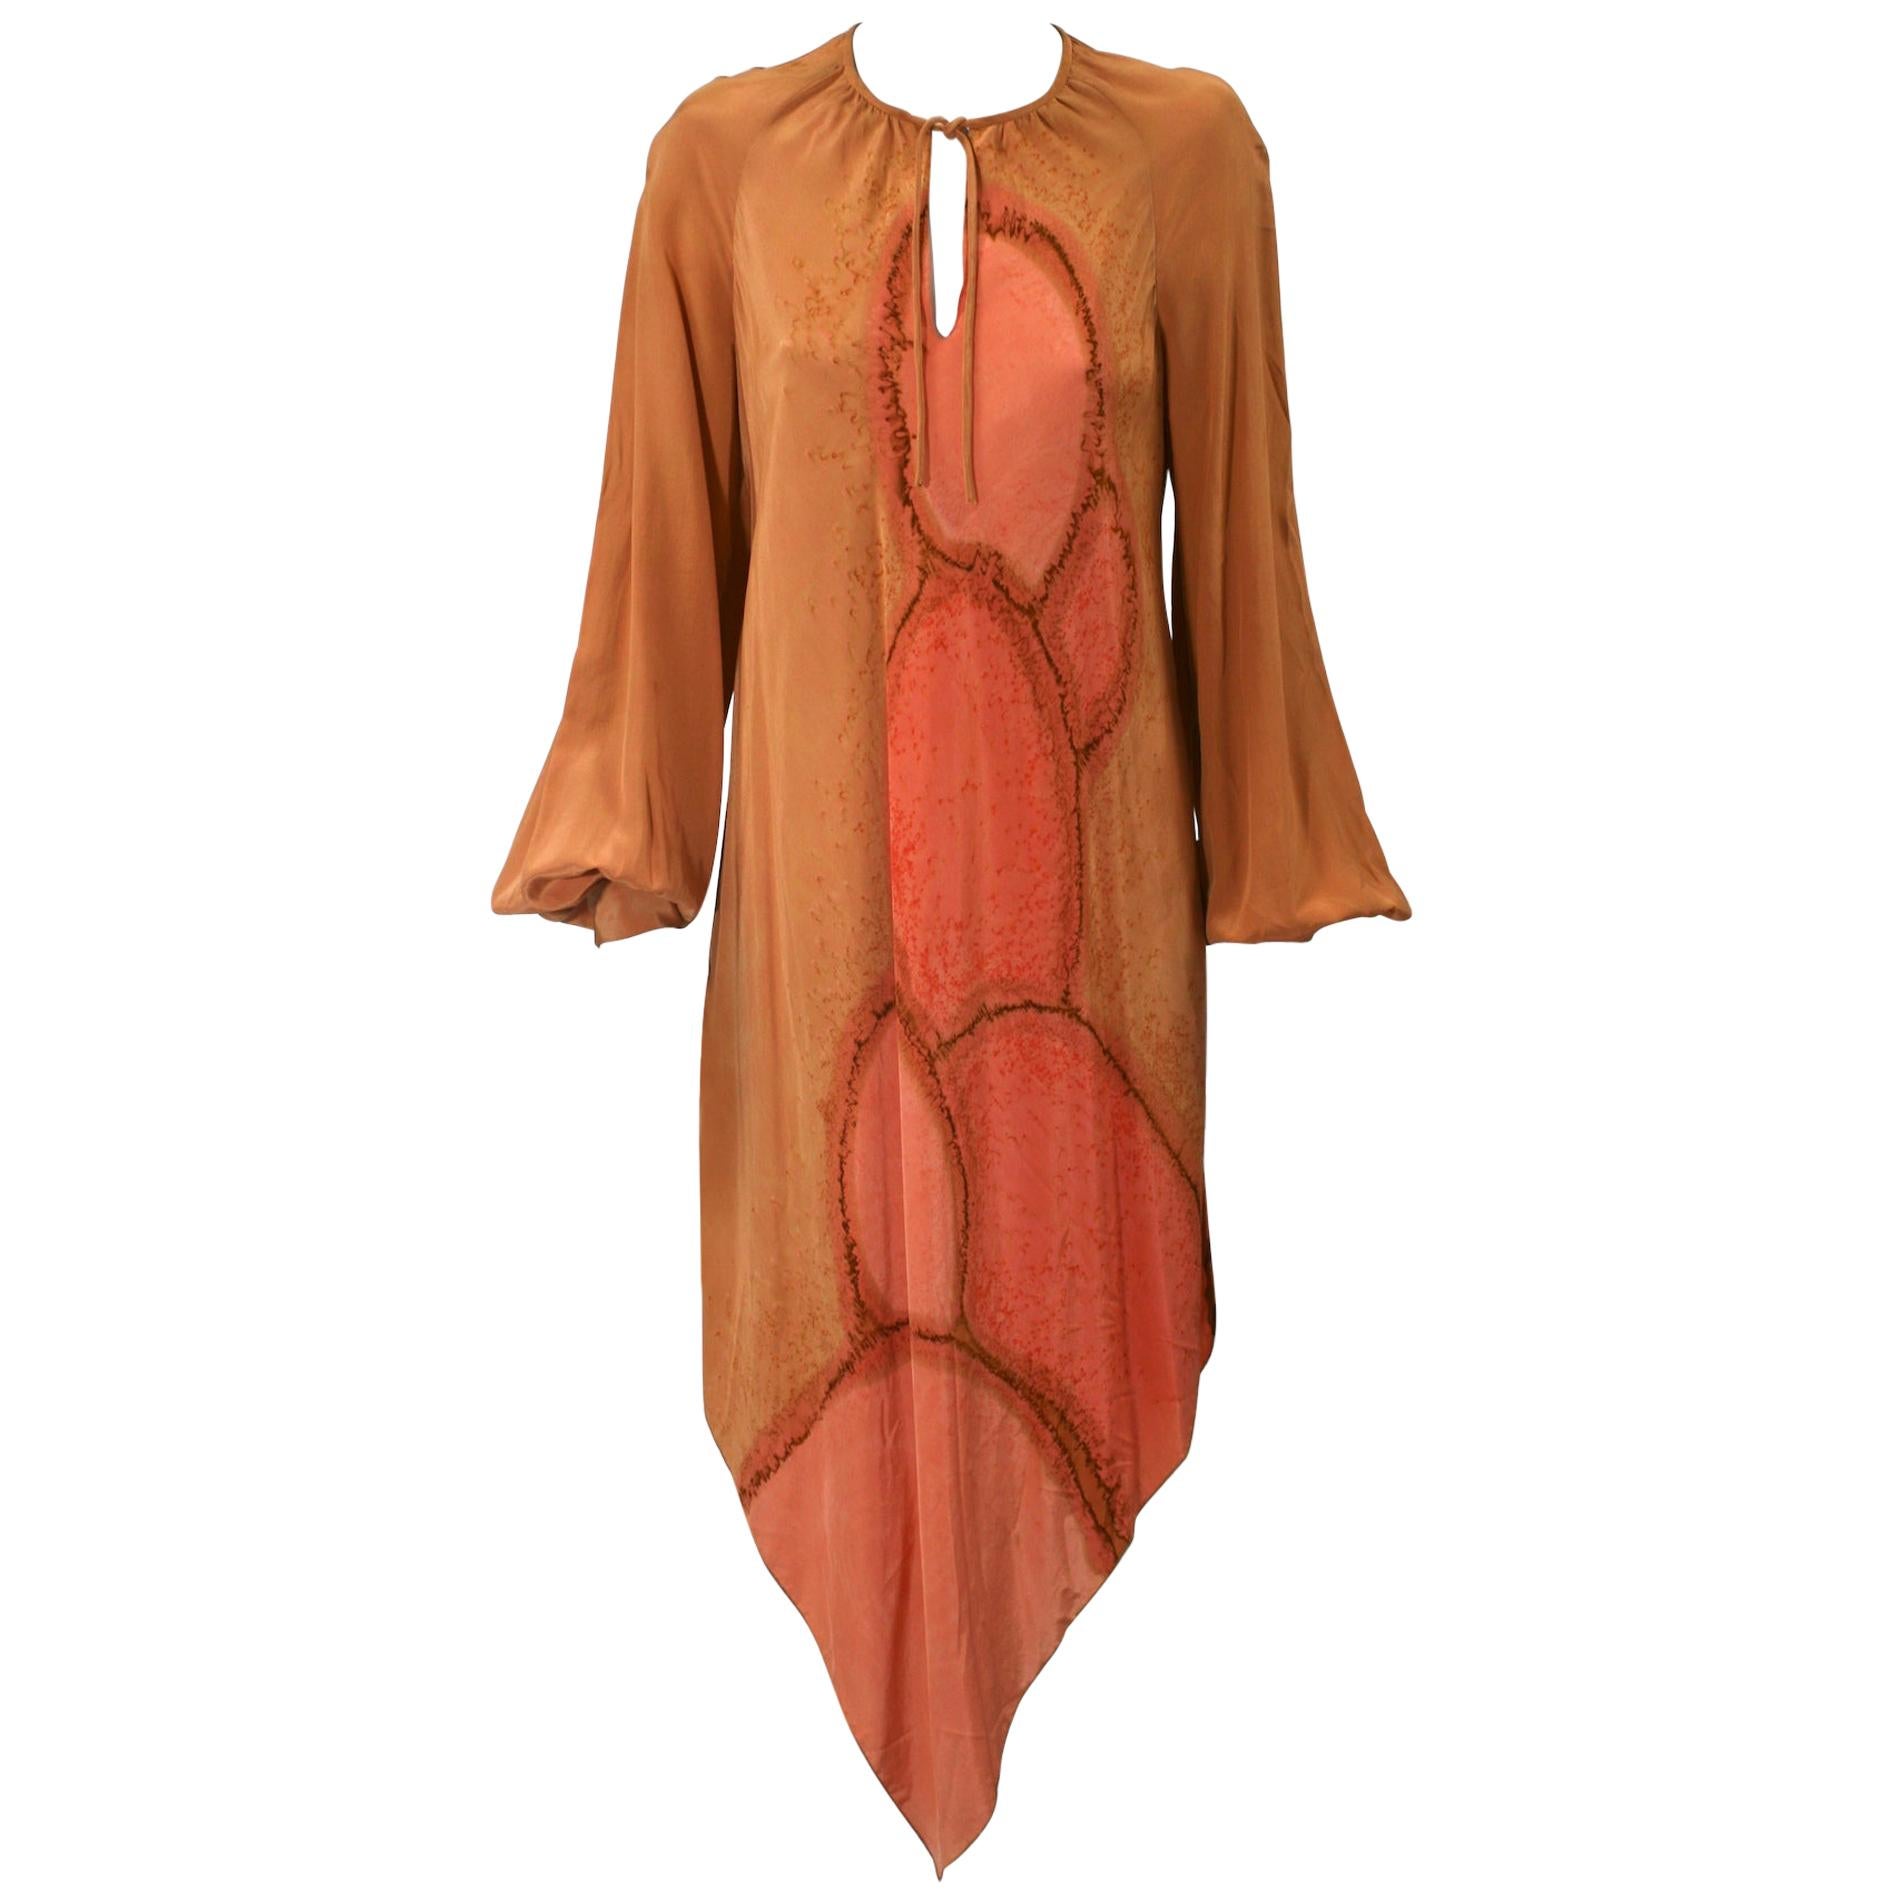  Autumnal Tie Dye Dress, Provenance, Wardrobe of Lillian Gish  